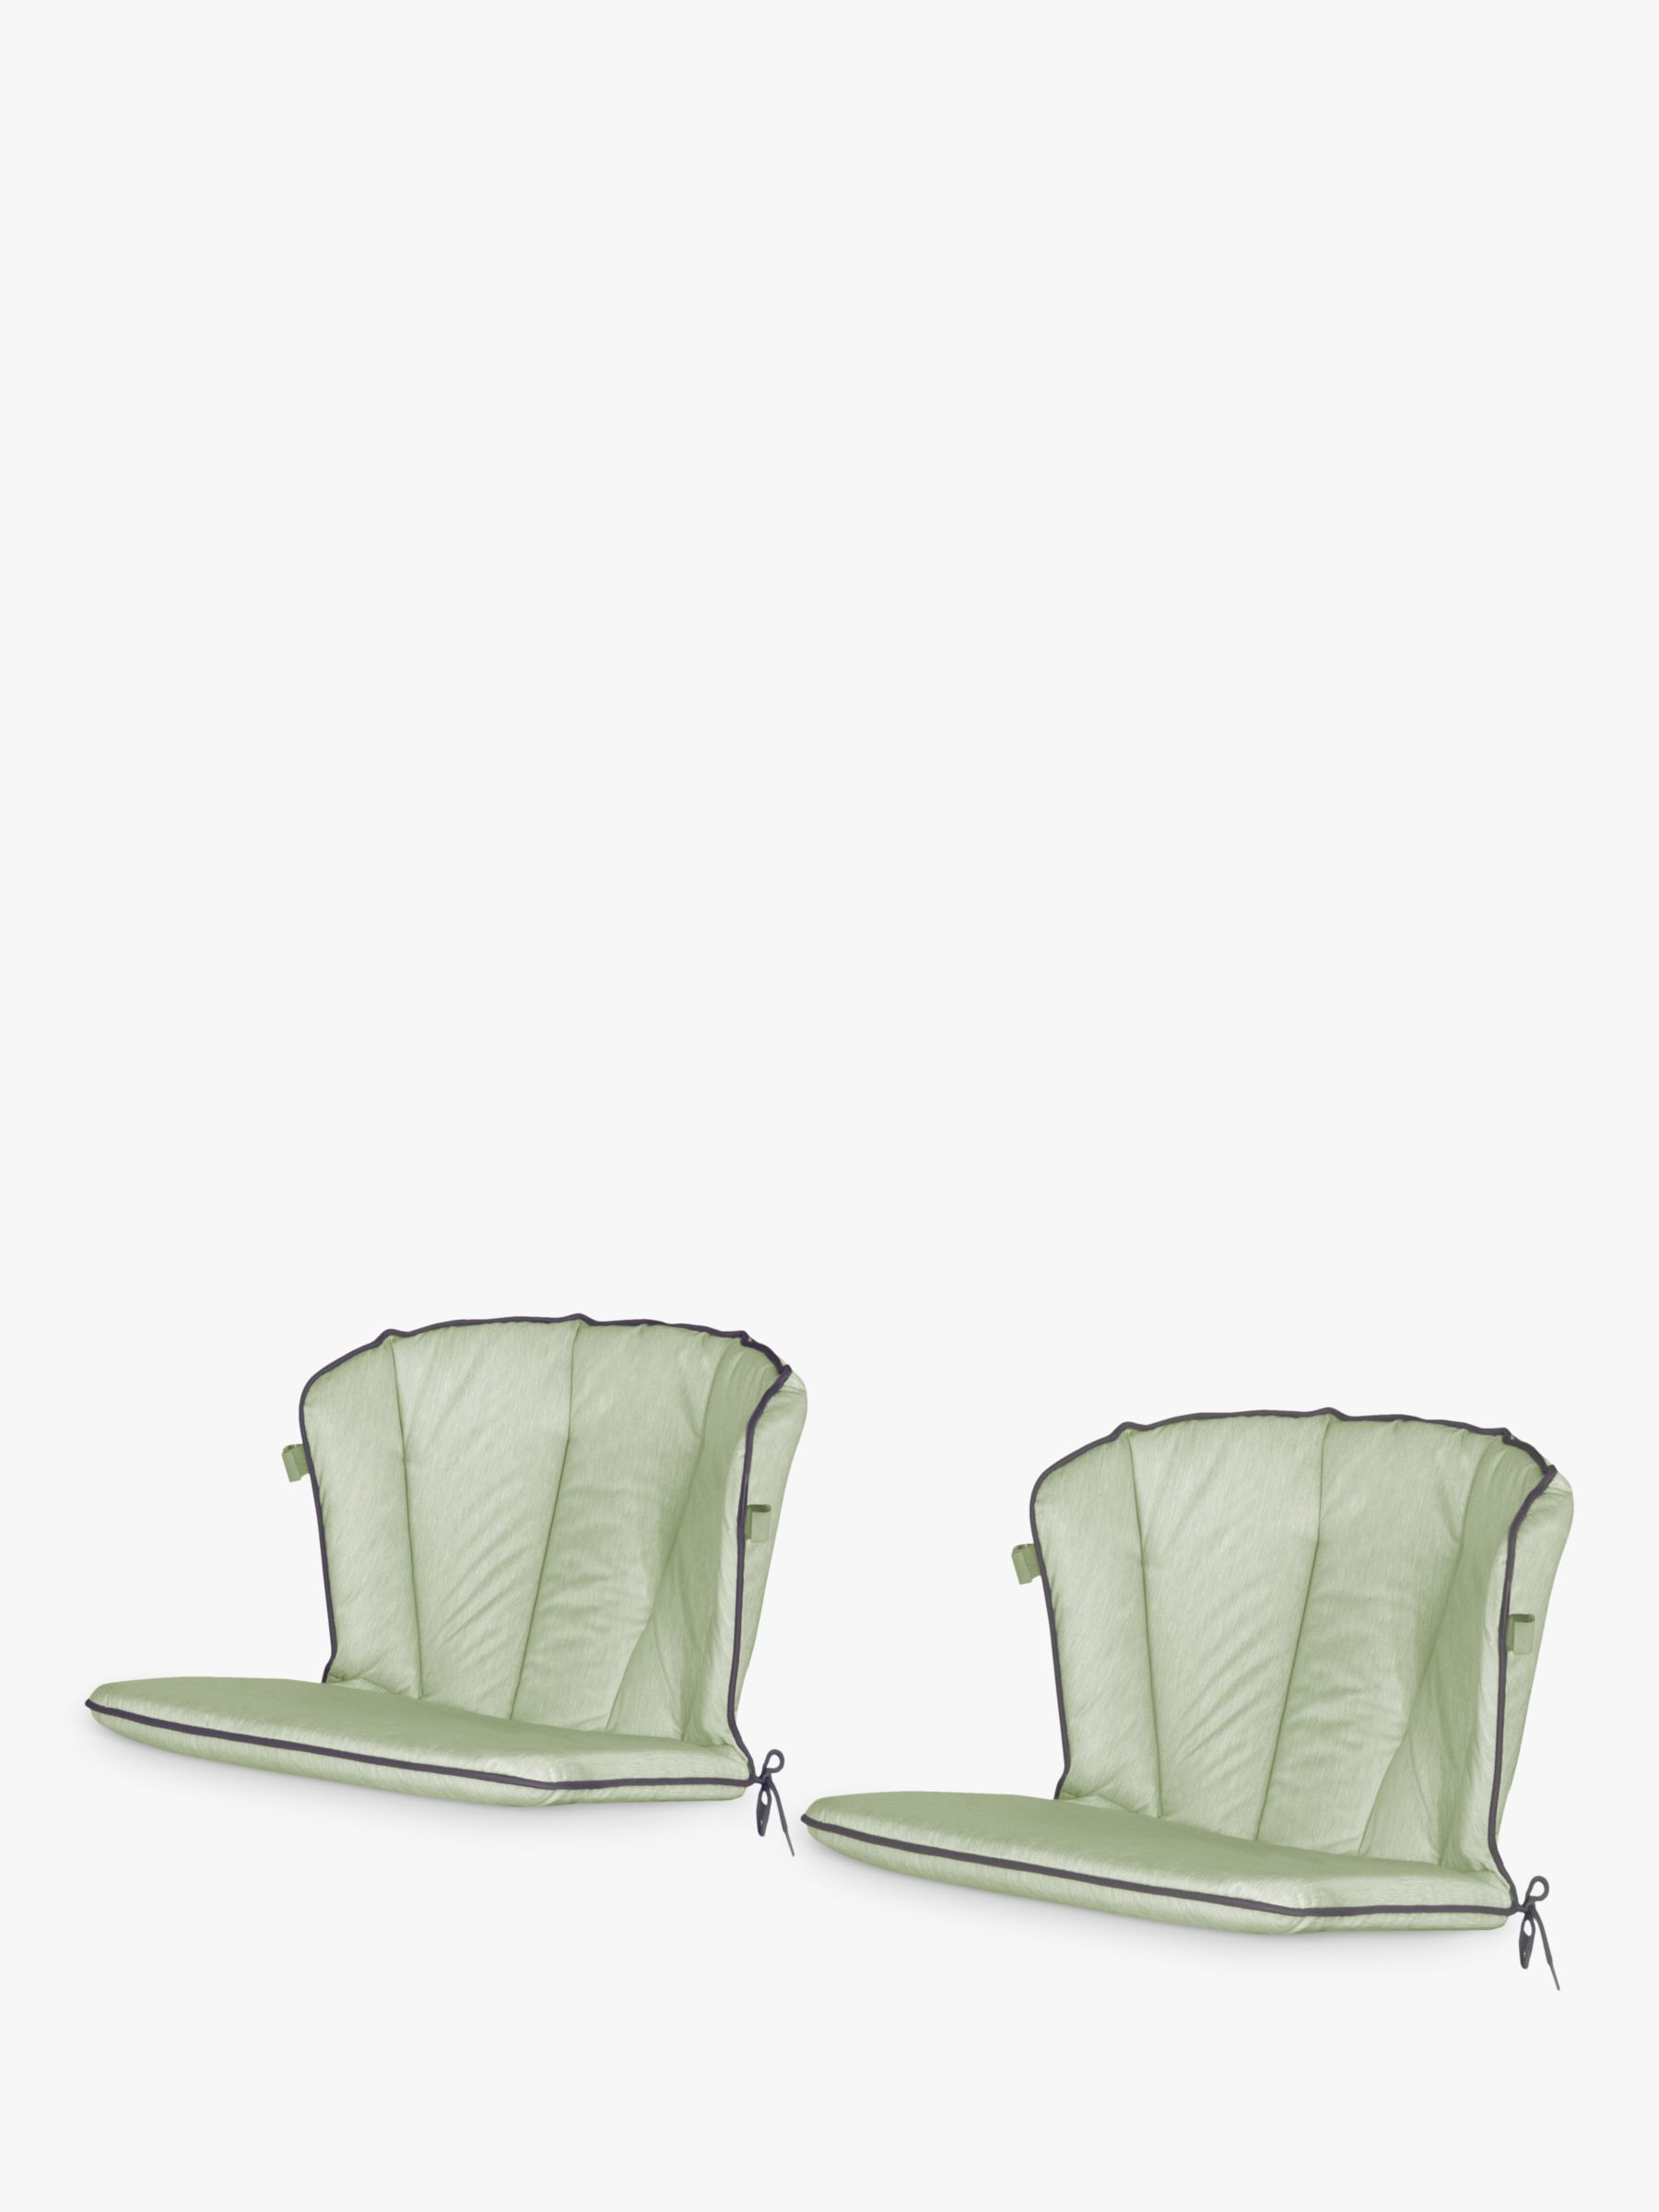 John Lewis Henley by KETTLER Round Chair Cushion, Set of 2, Sage